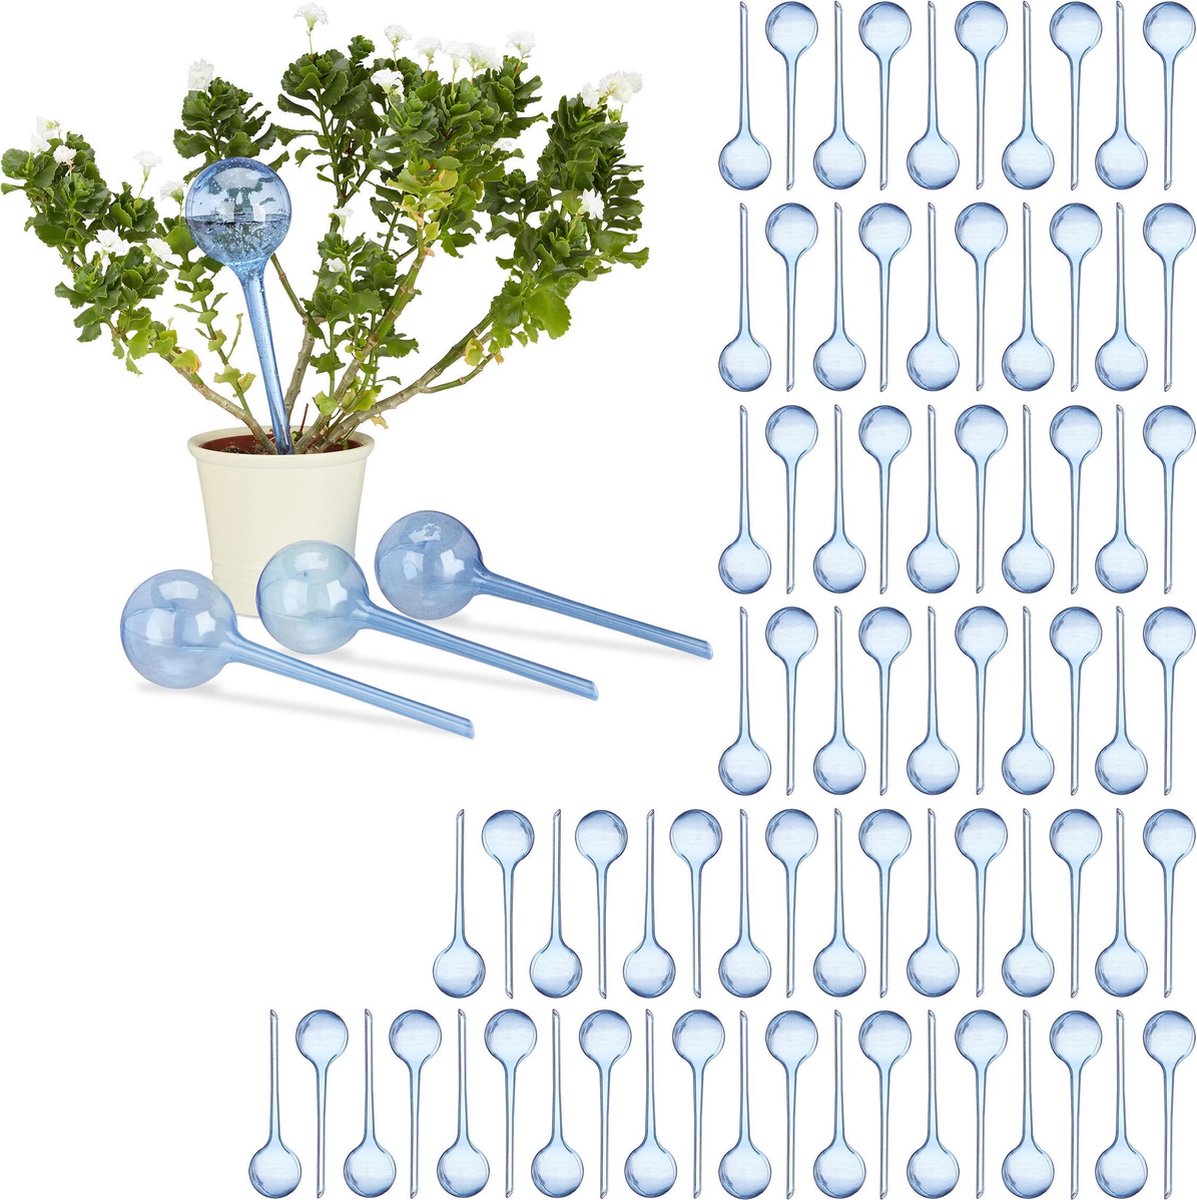 Relaxdays 80 x waterdruppelaar set 80 stuks watergeefsysteem – plantbewateringssysteem